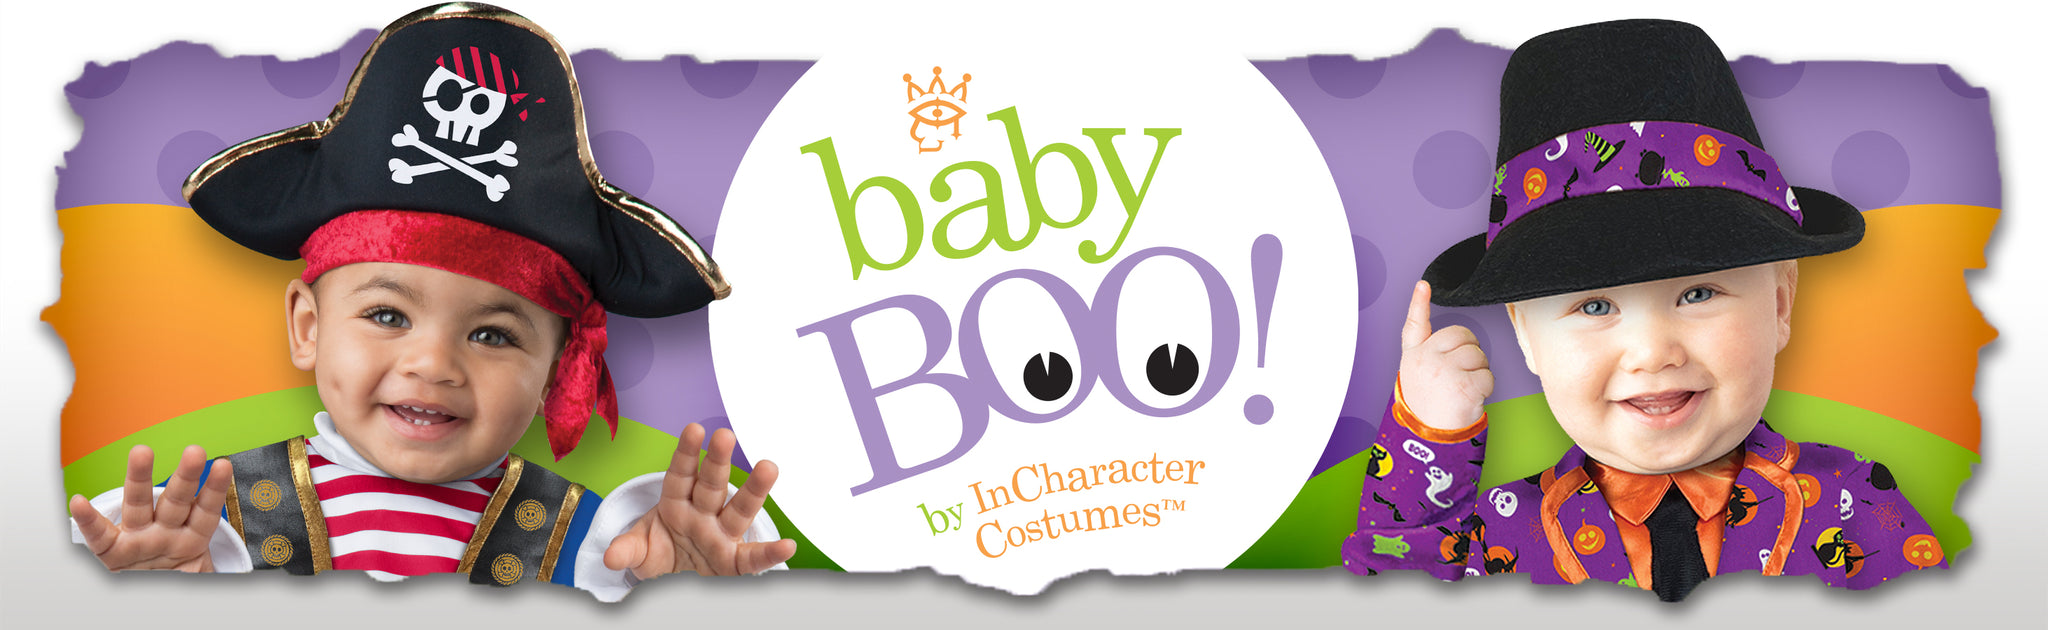 Baby BOO! - Baby